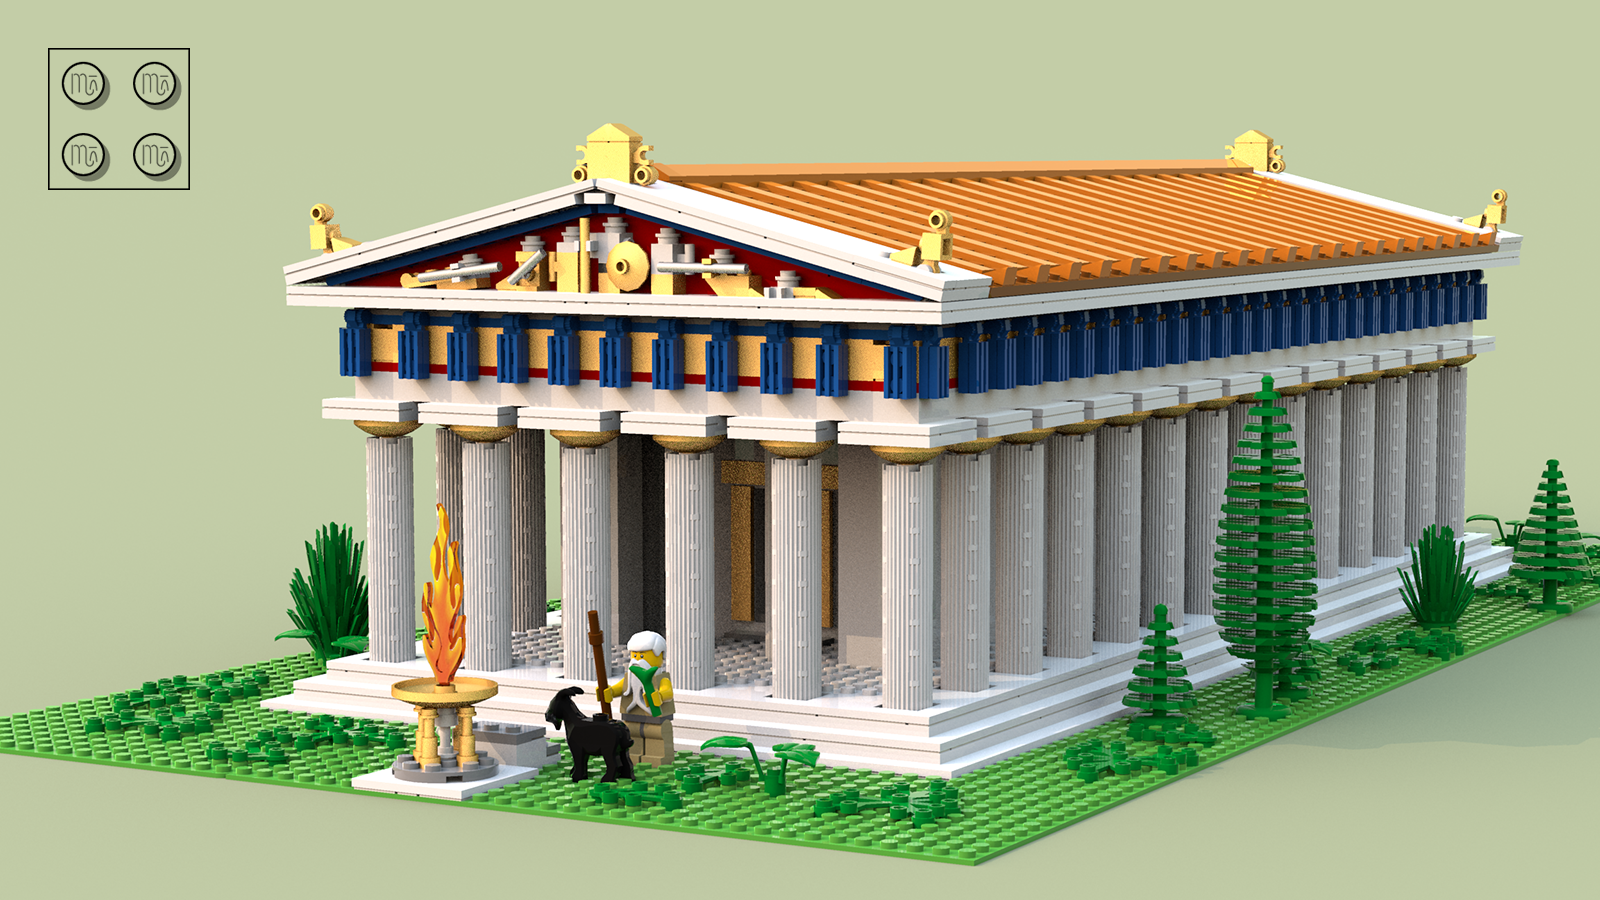 Athens-ancient-greece-585514_